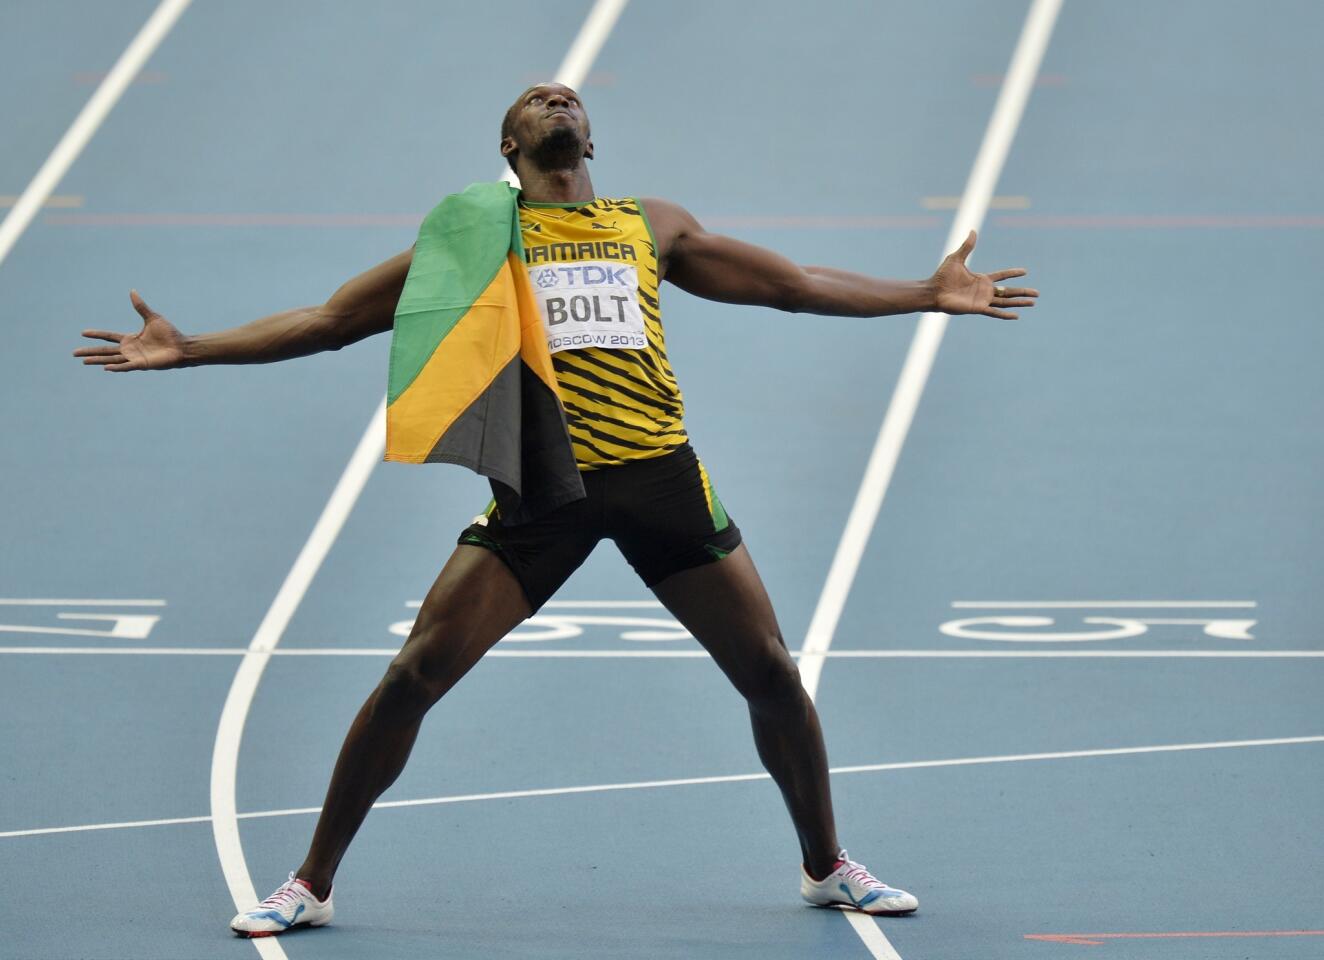 Bolt celebrates